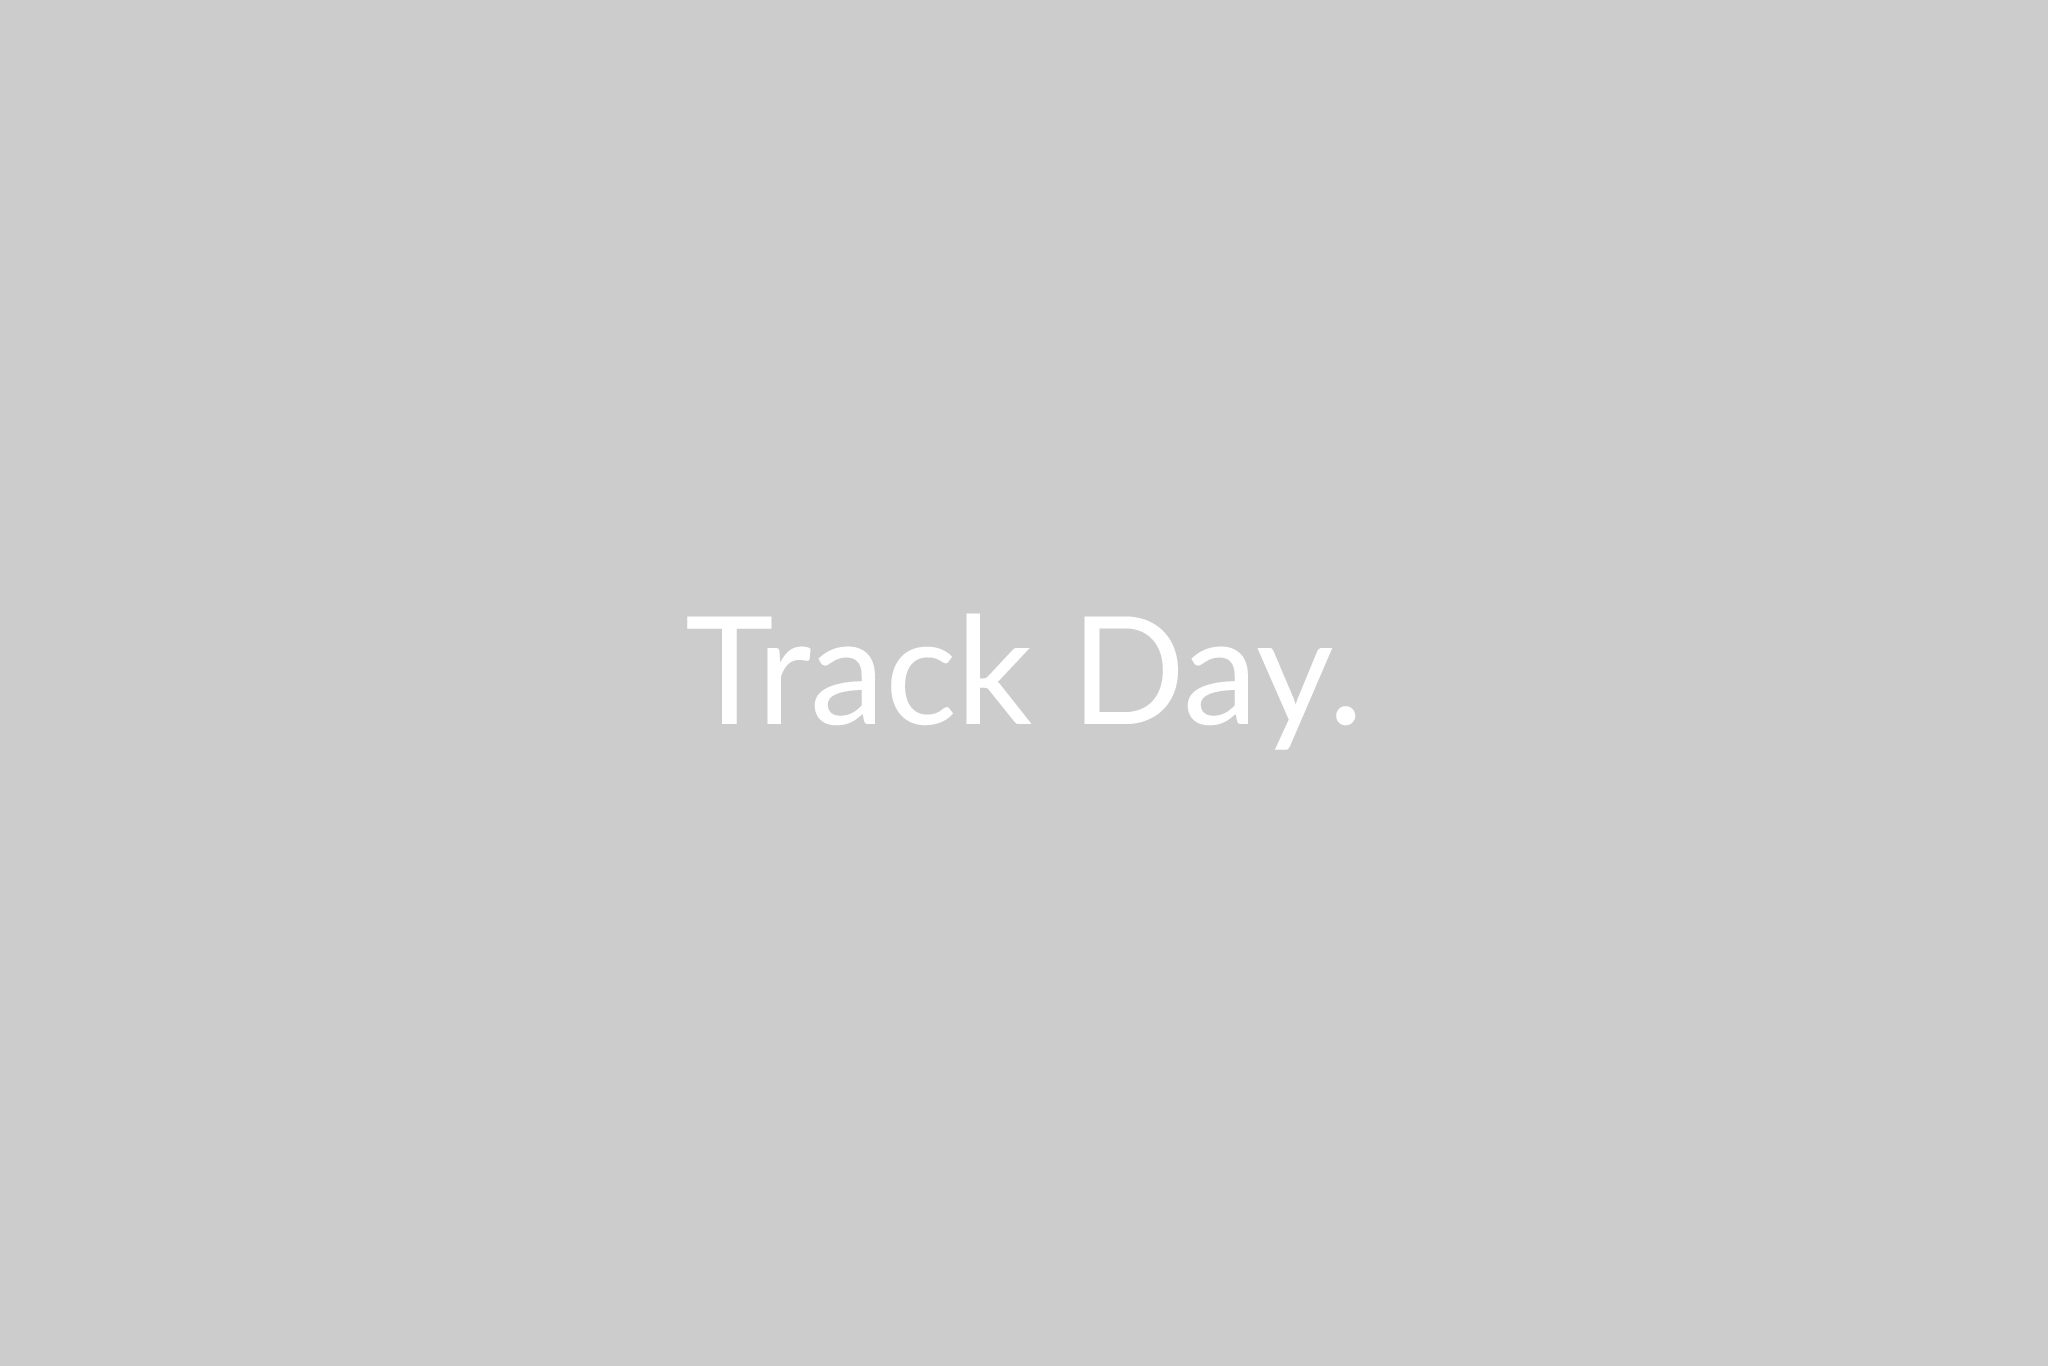  Track Day